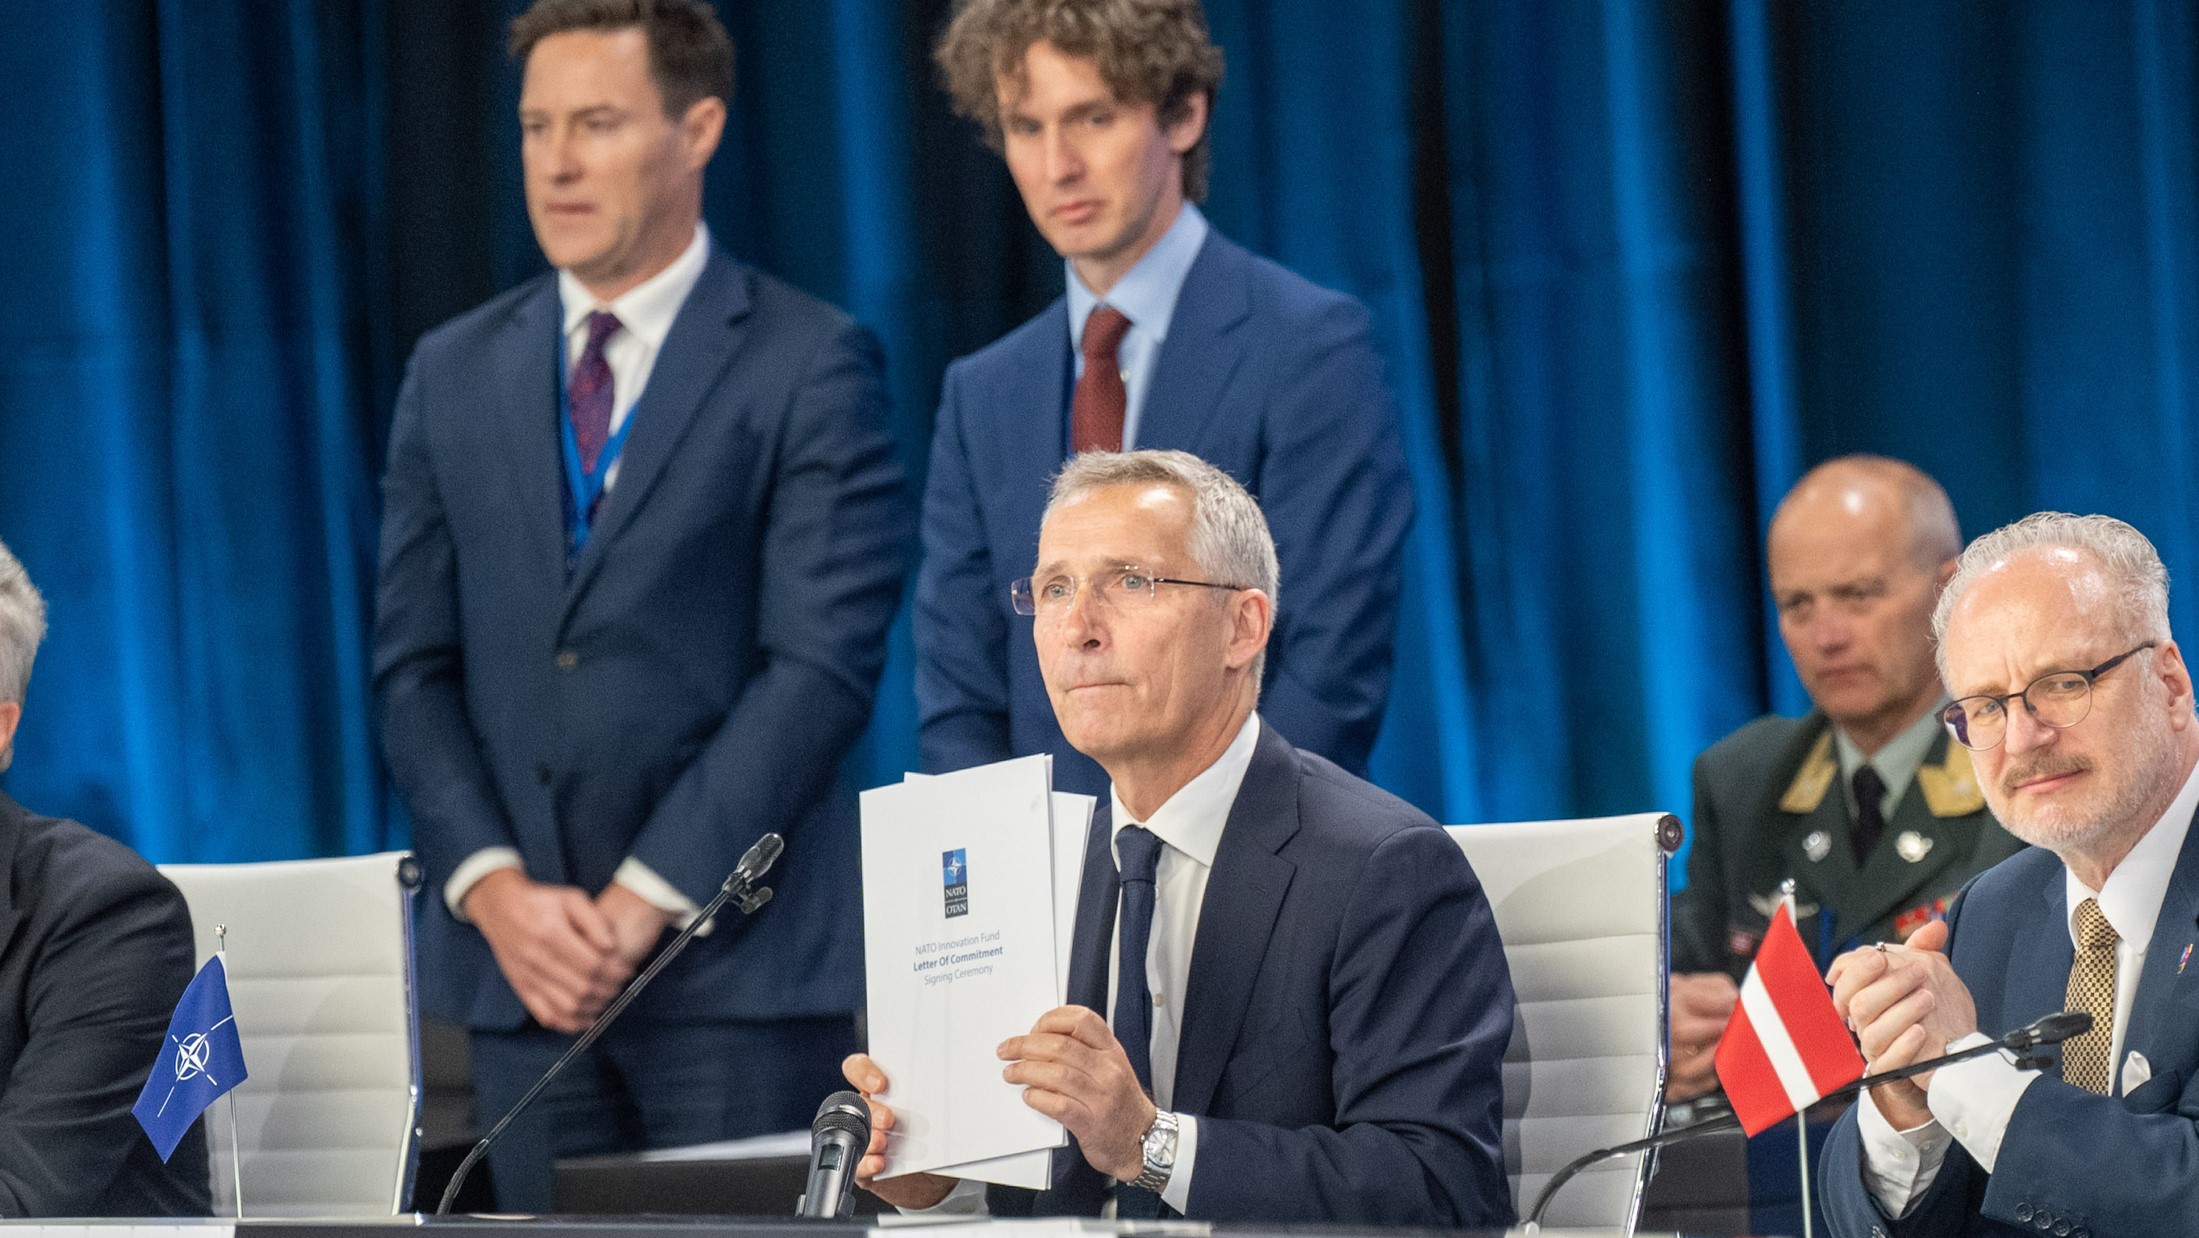 NATO leaders establish new €1B innovation fund, accelerator